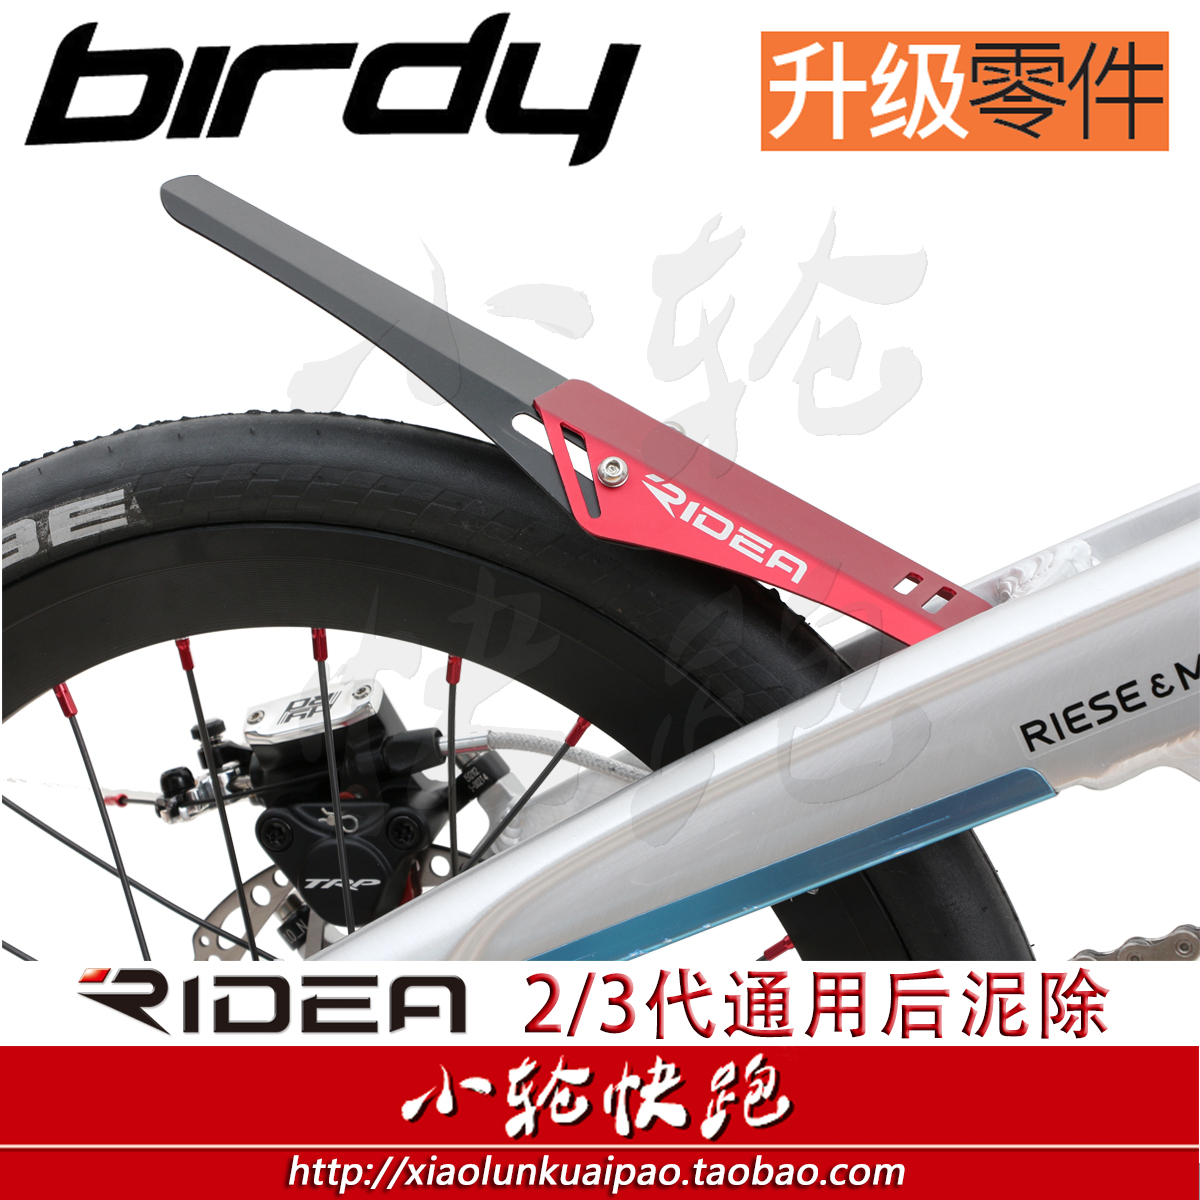 birdy bike accessories